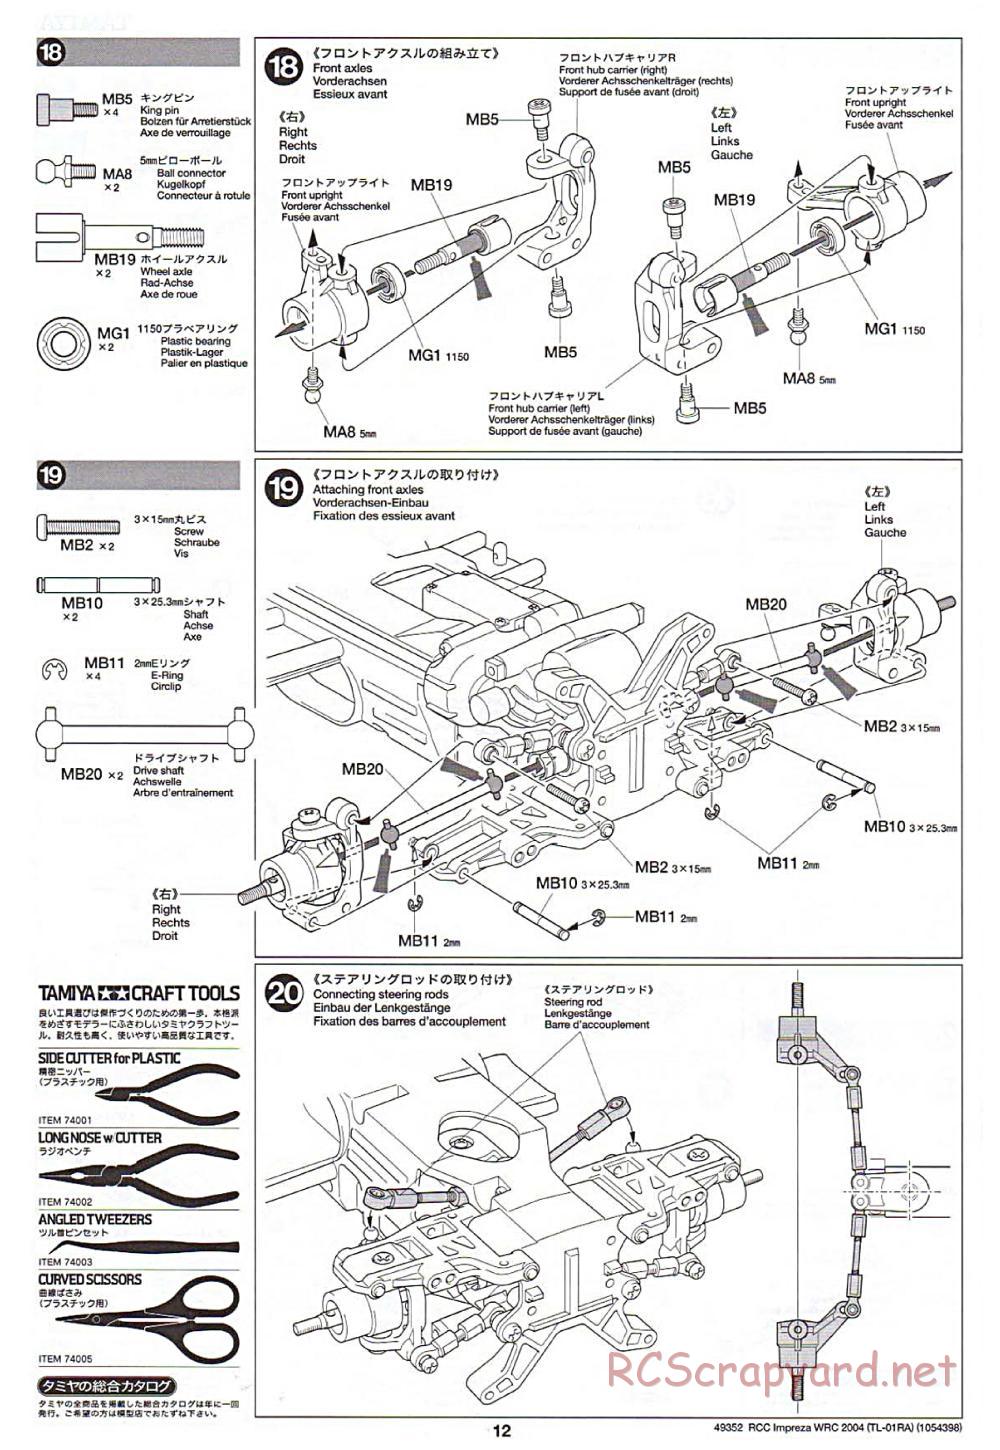 Tamiya - Subaru Impreza WRC 2004 Chassis - Manual - Page 12